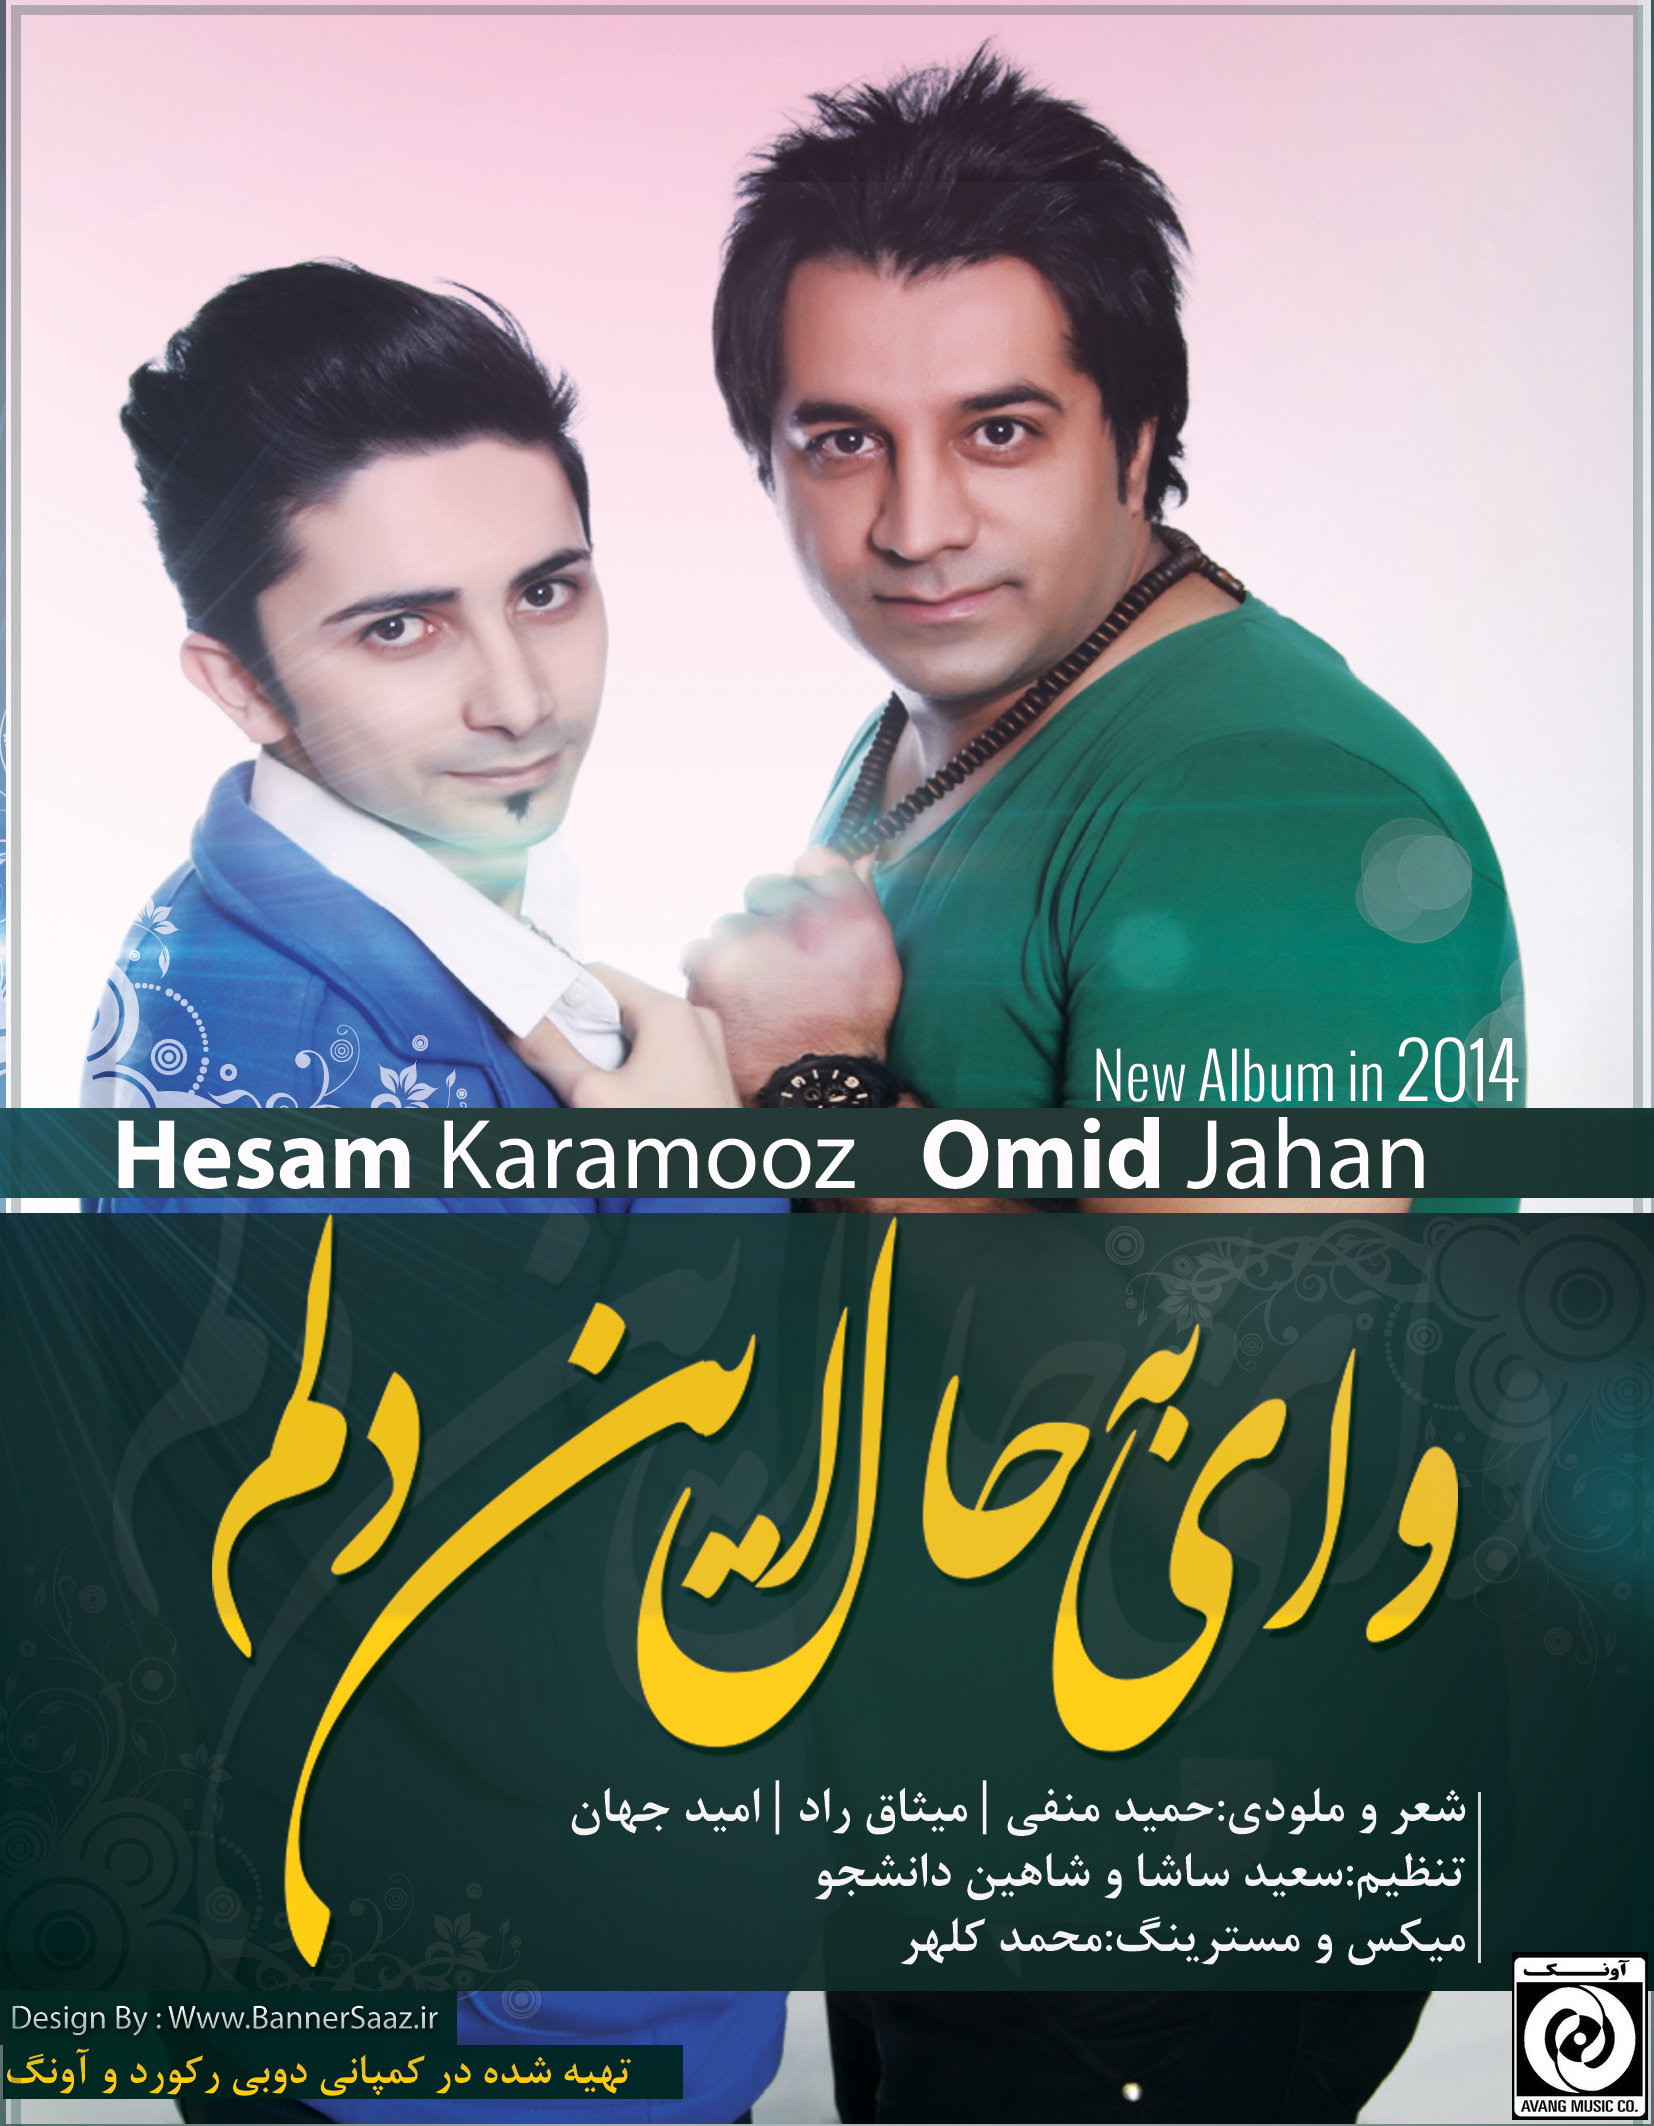 Арабский песни яла яла. Omid Jahan. Омид Джахан биография. Хесам. "Hesam Motlagh" "Iran".